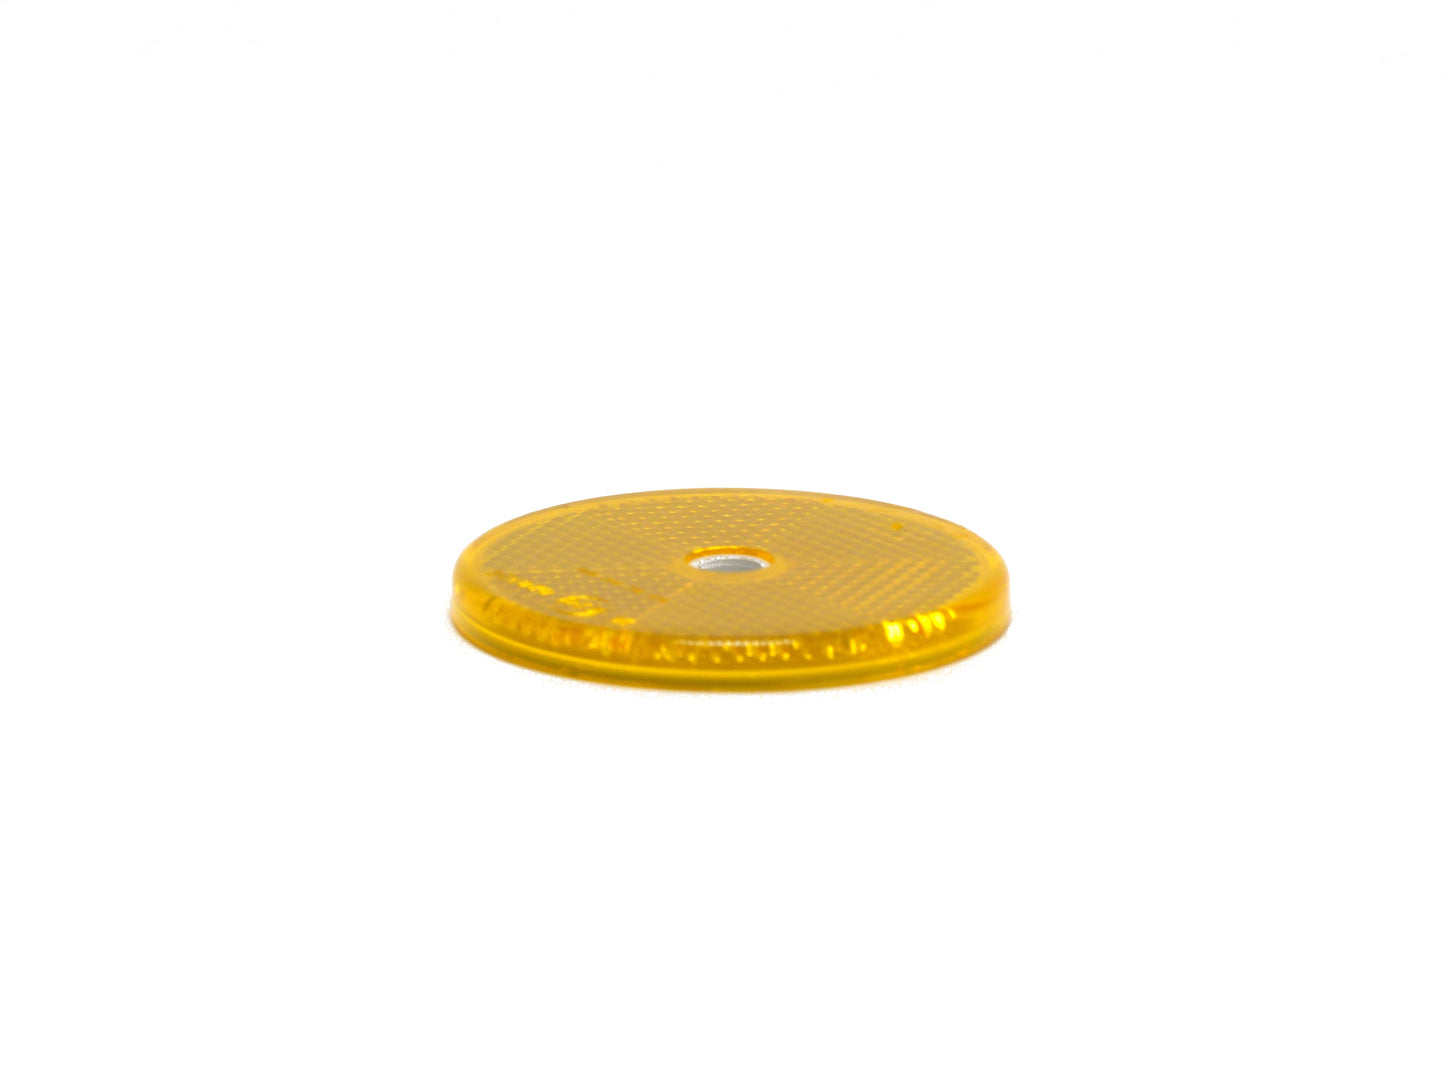 Reflector 60mm round yellow